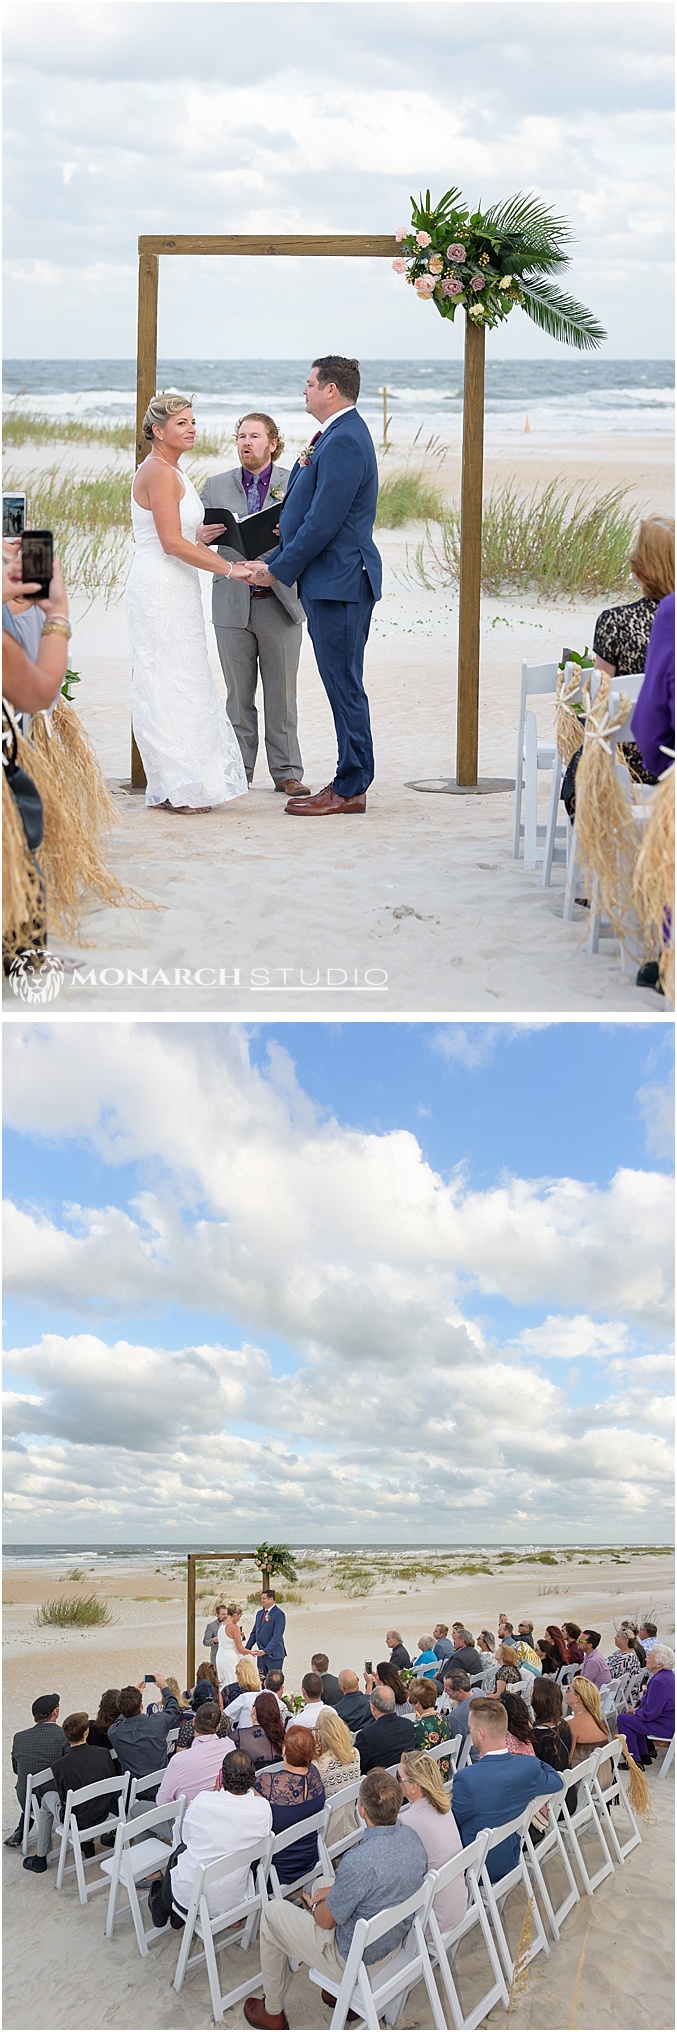 st-augustine-beach-wedding-photographer-030.jpg